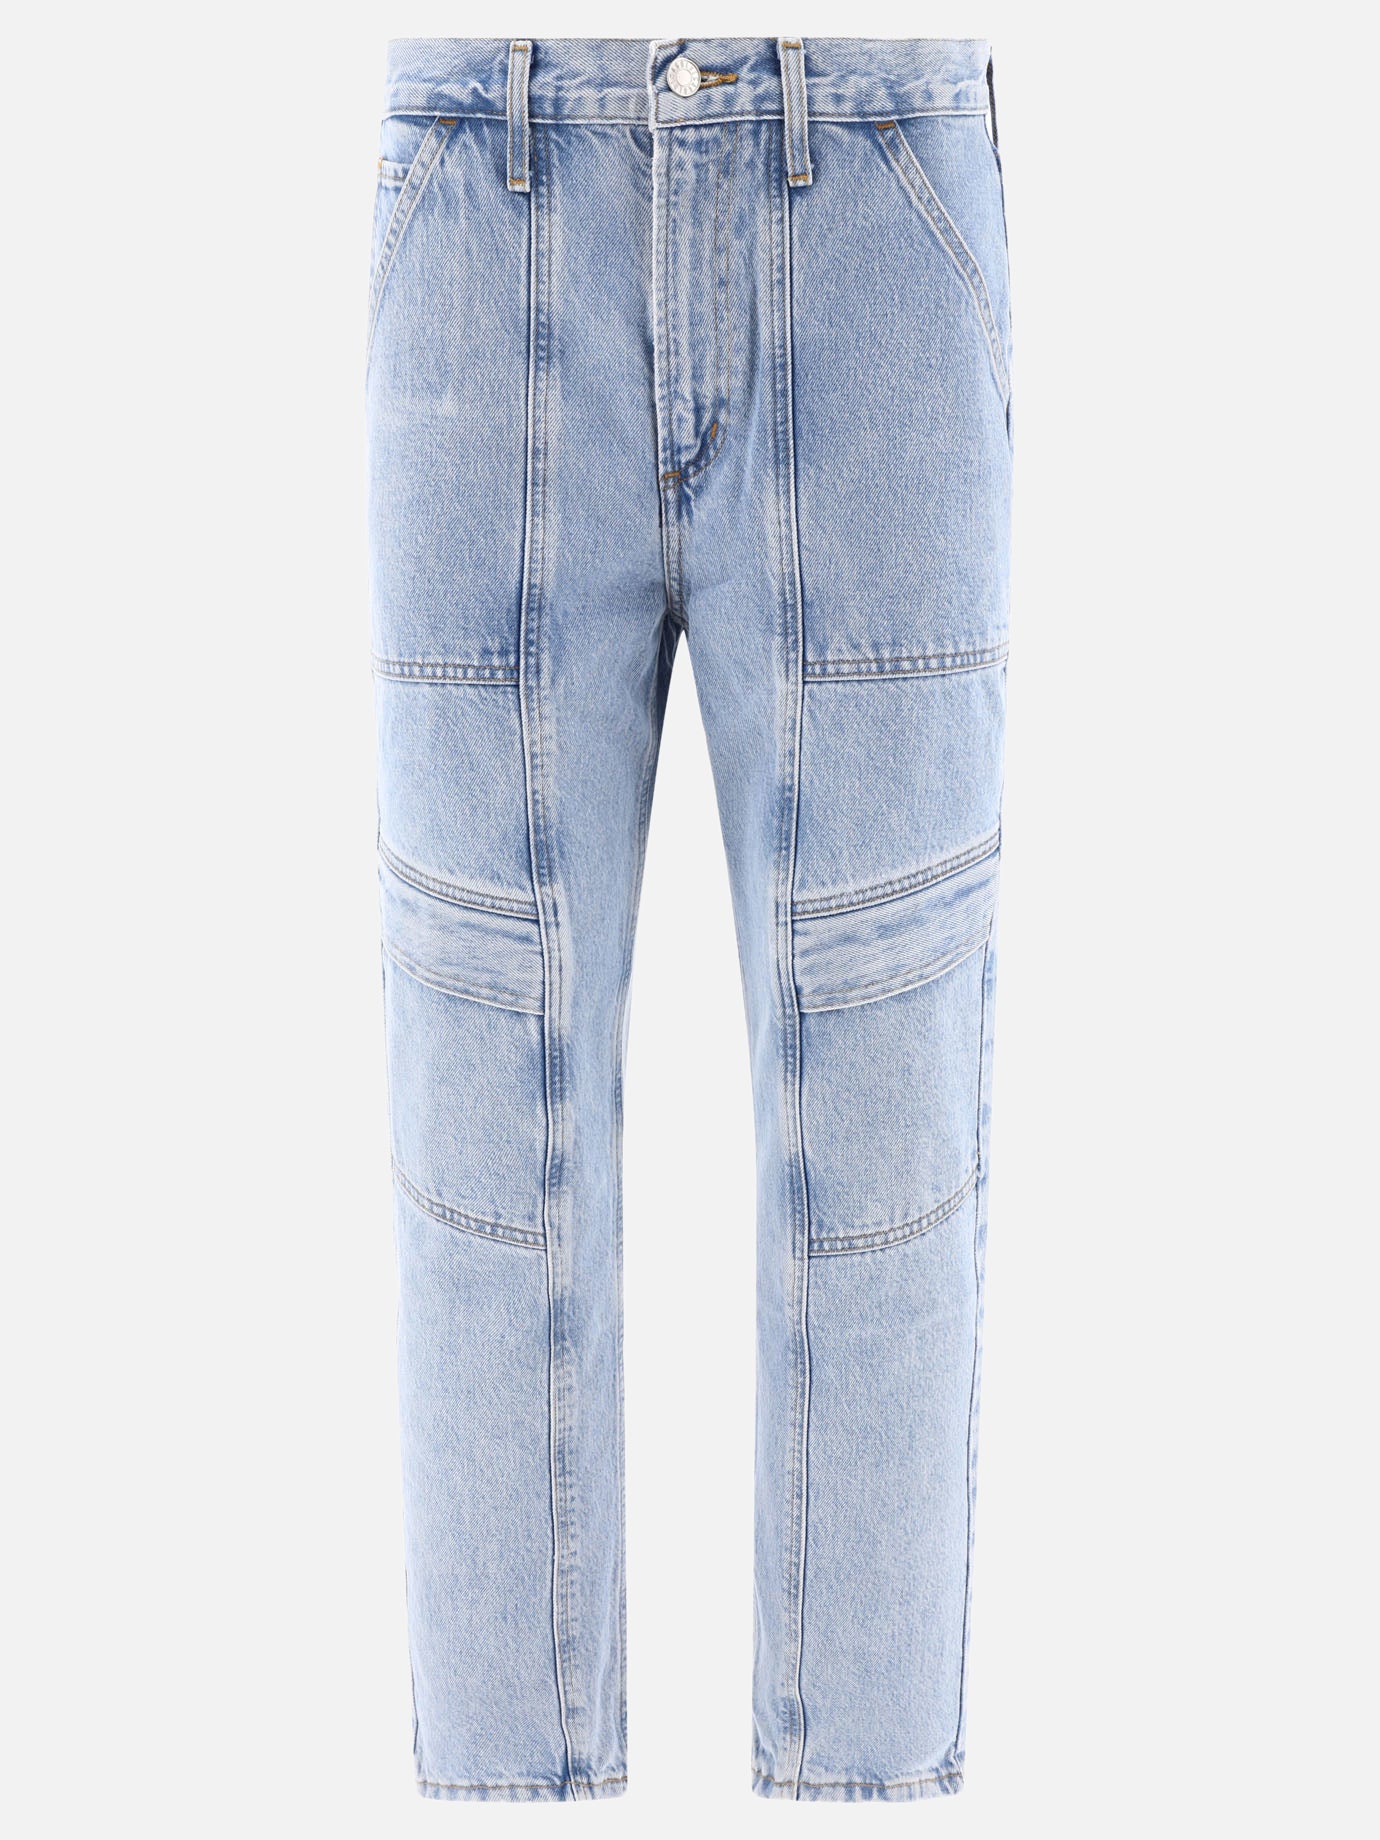 "Cooper" cargo jeans